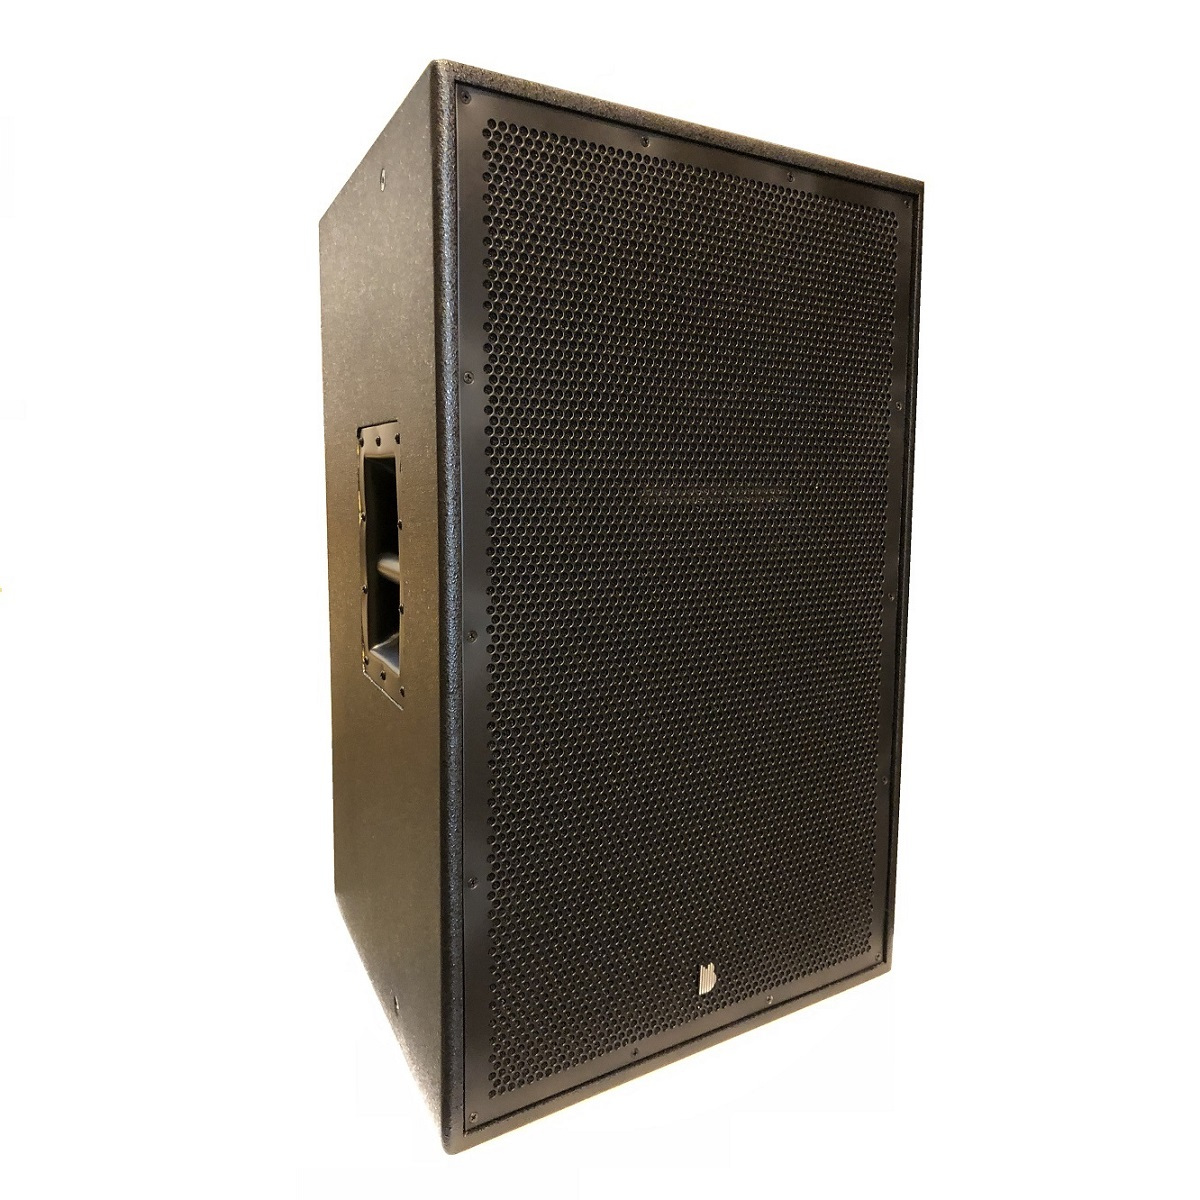 Bishop Sound single 15 passive speaker